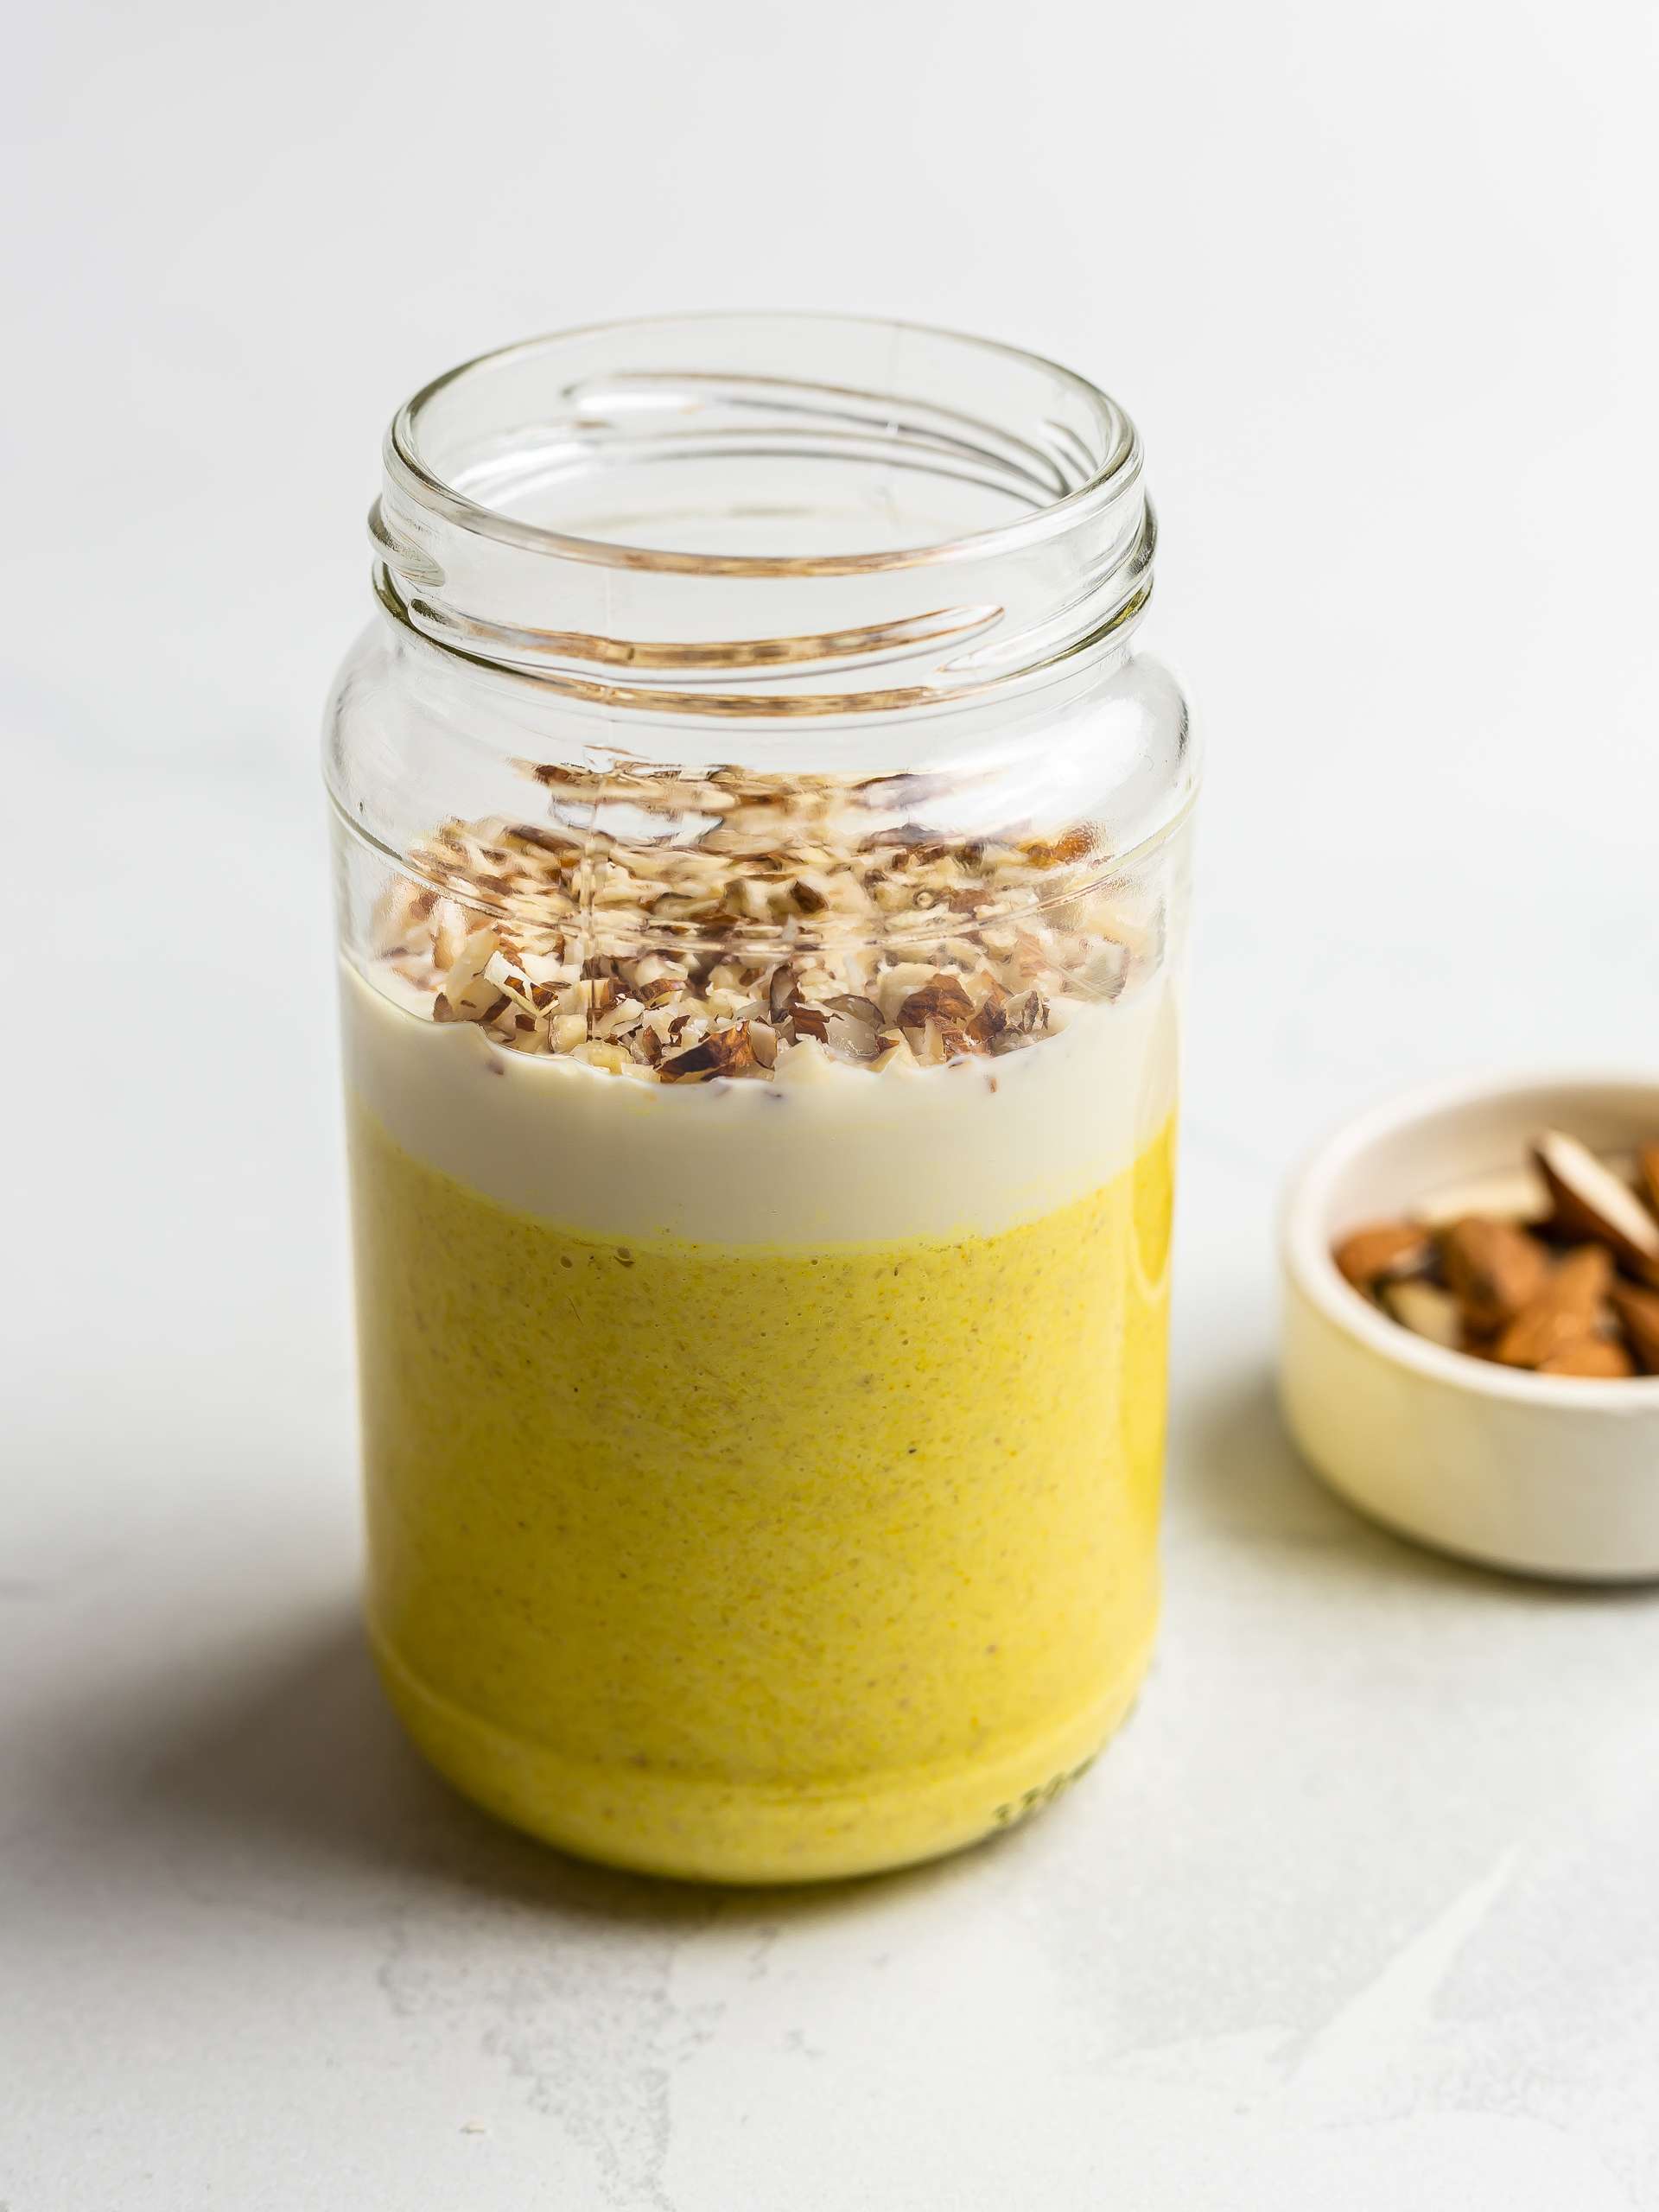 mango lassi oats in a jar with chopped almonds